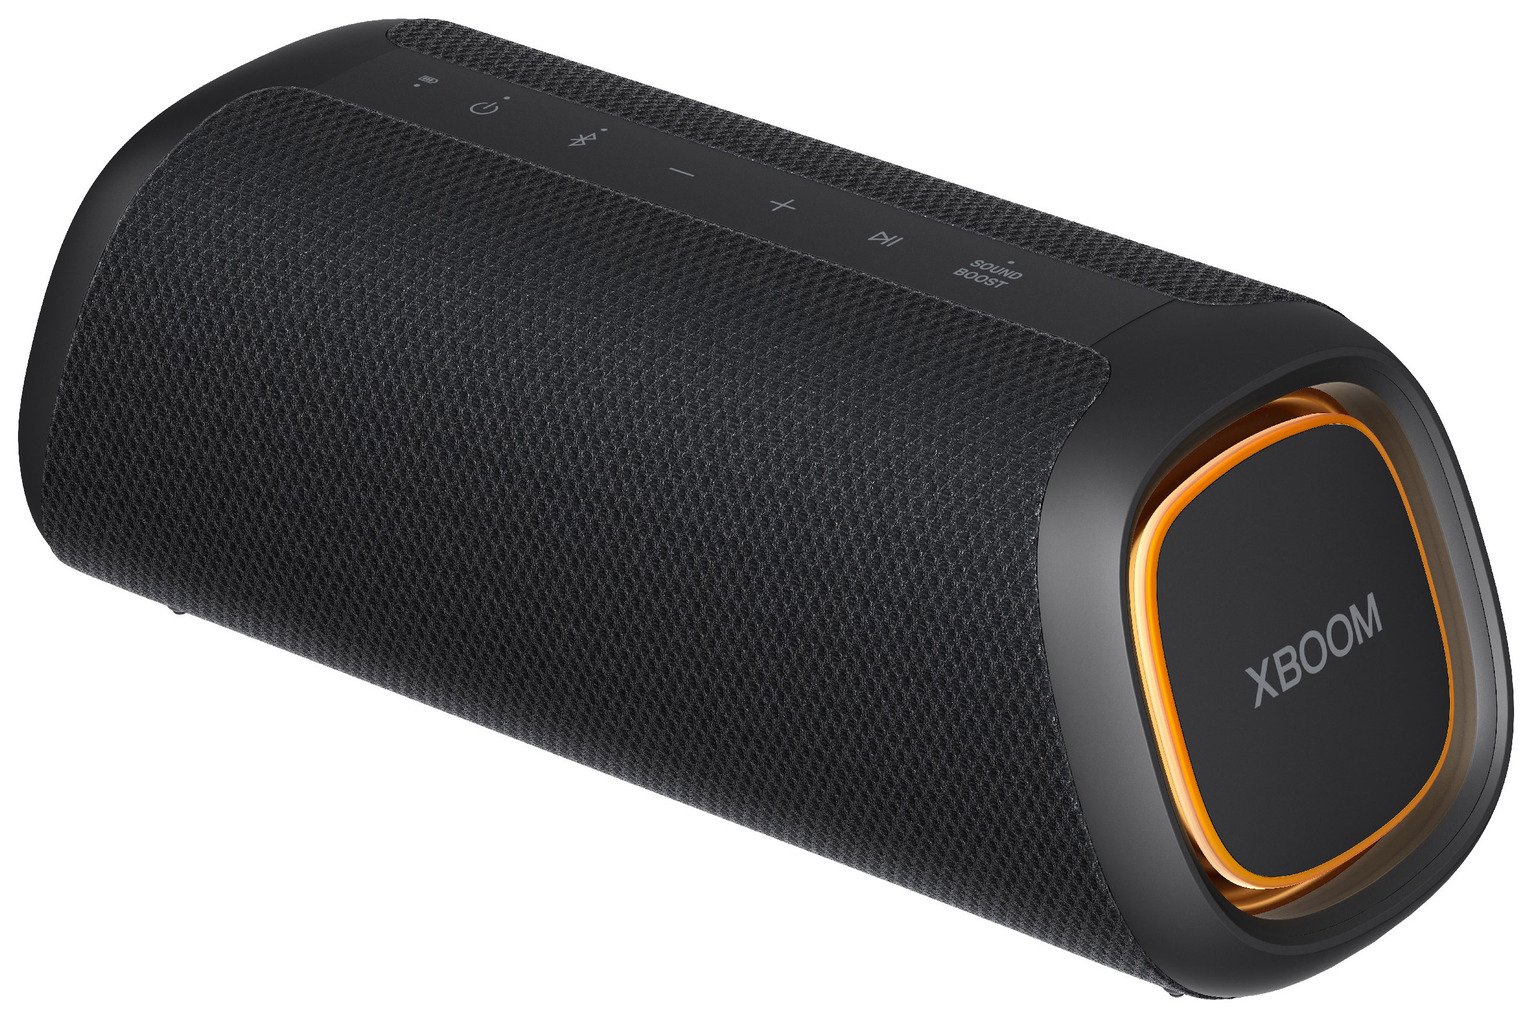 LG XBOOM Go XG7 Bluetooth Portable Speaker - Black